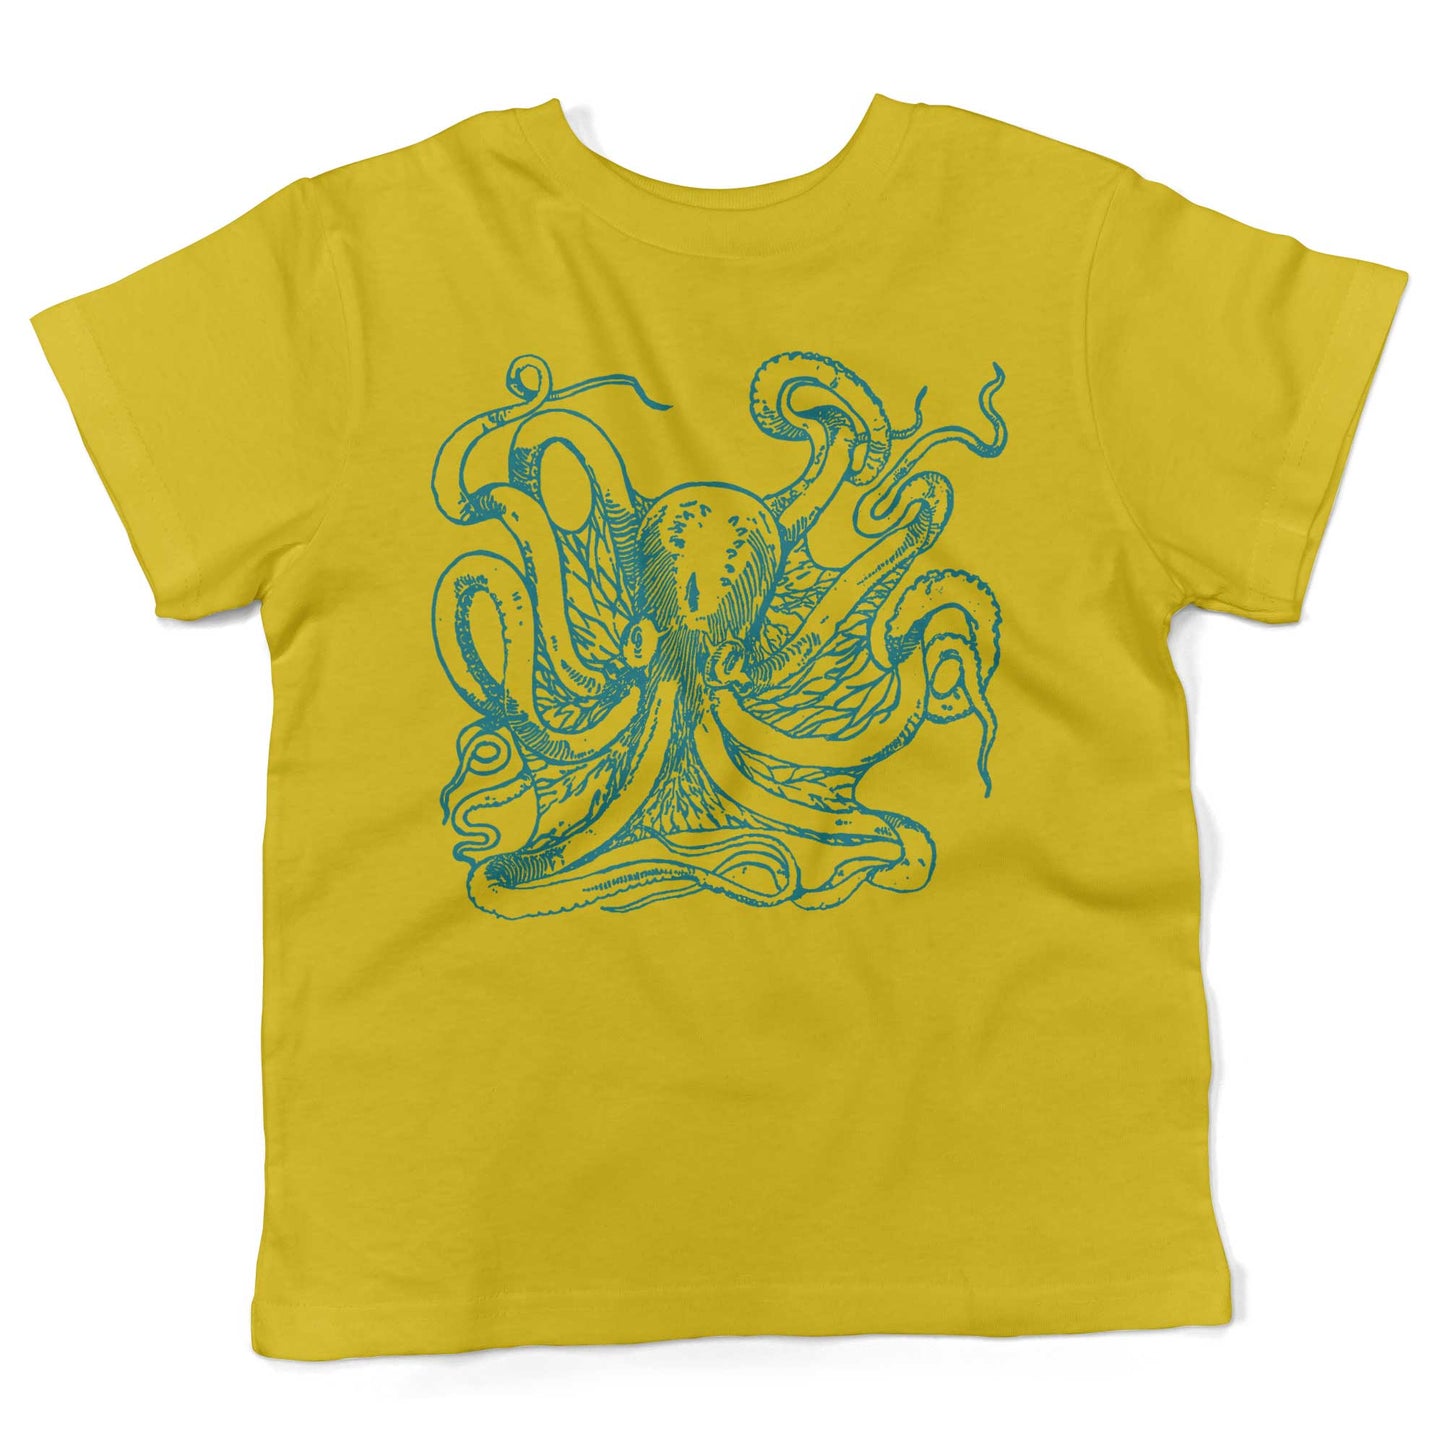 Giant Octopus Toddler Shirt-Sunshine Yellow-2T